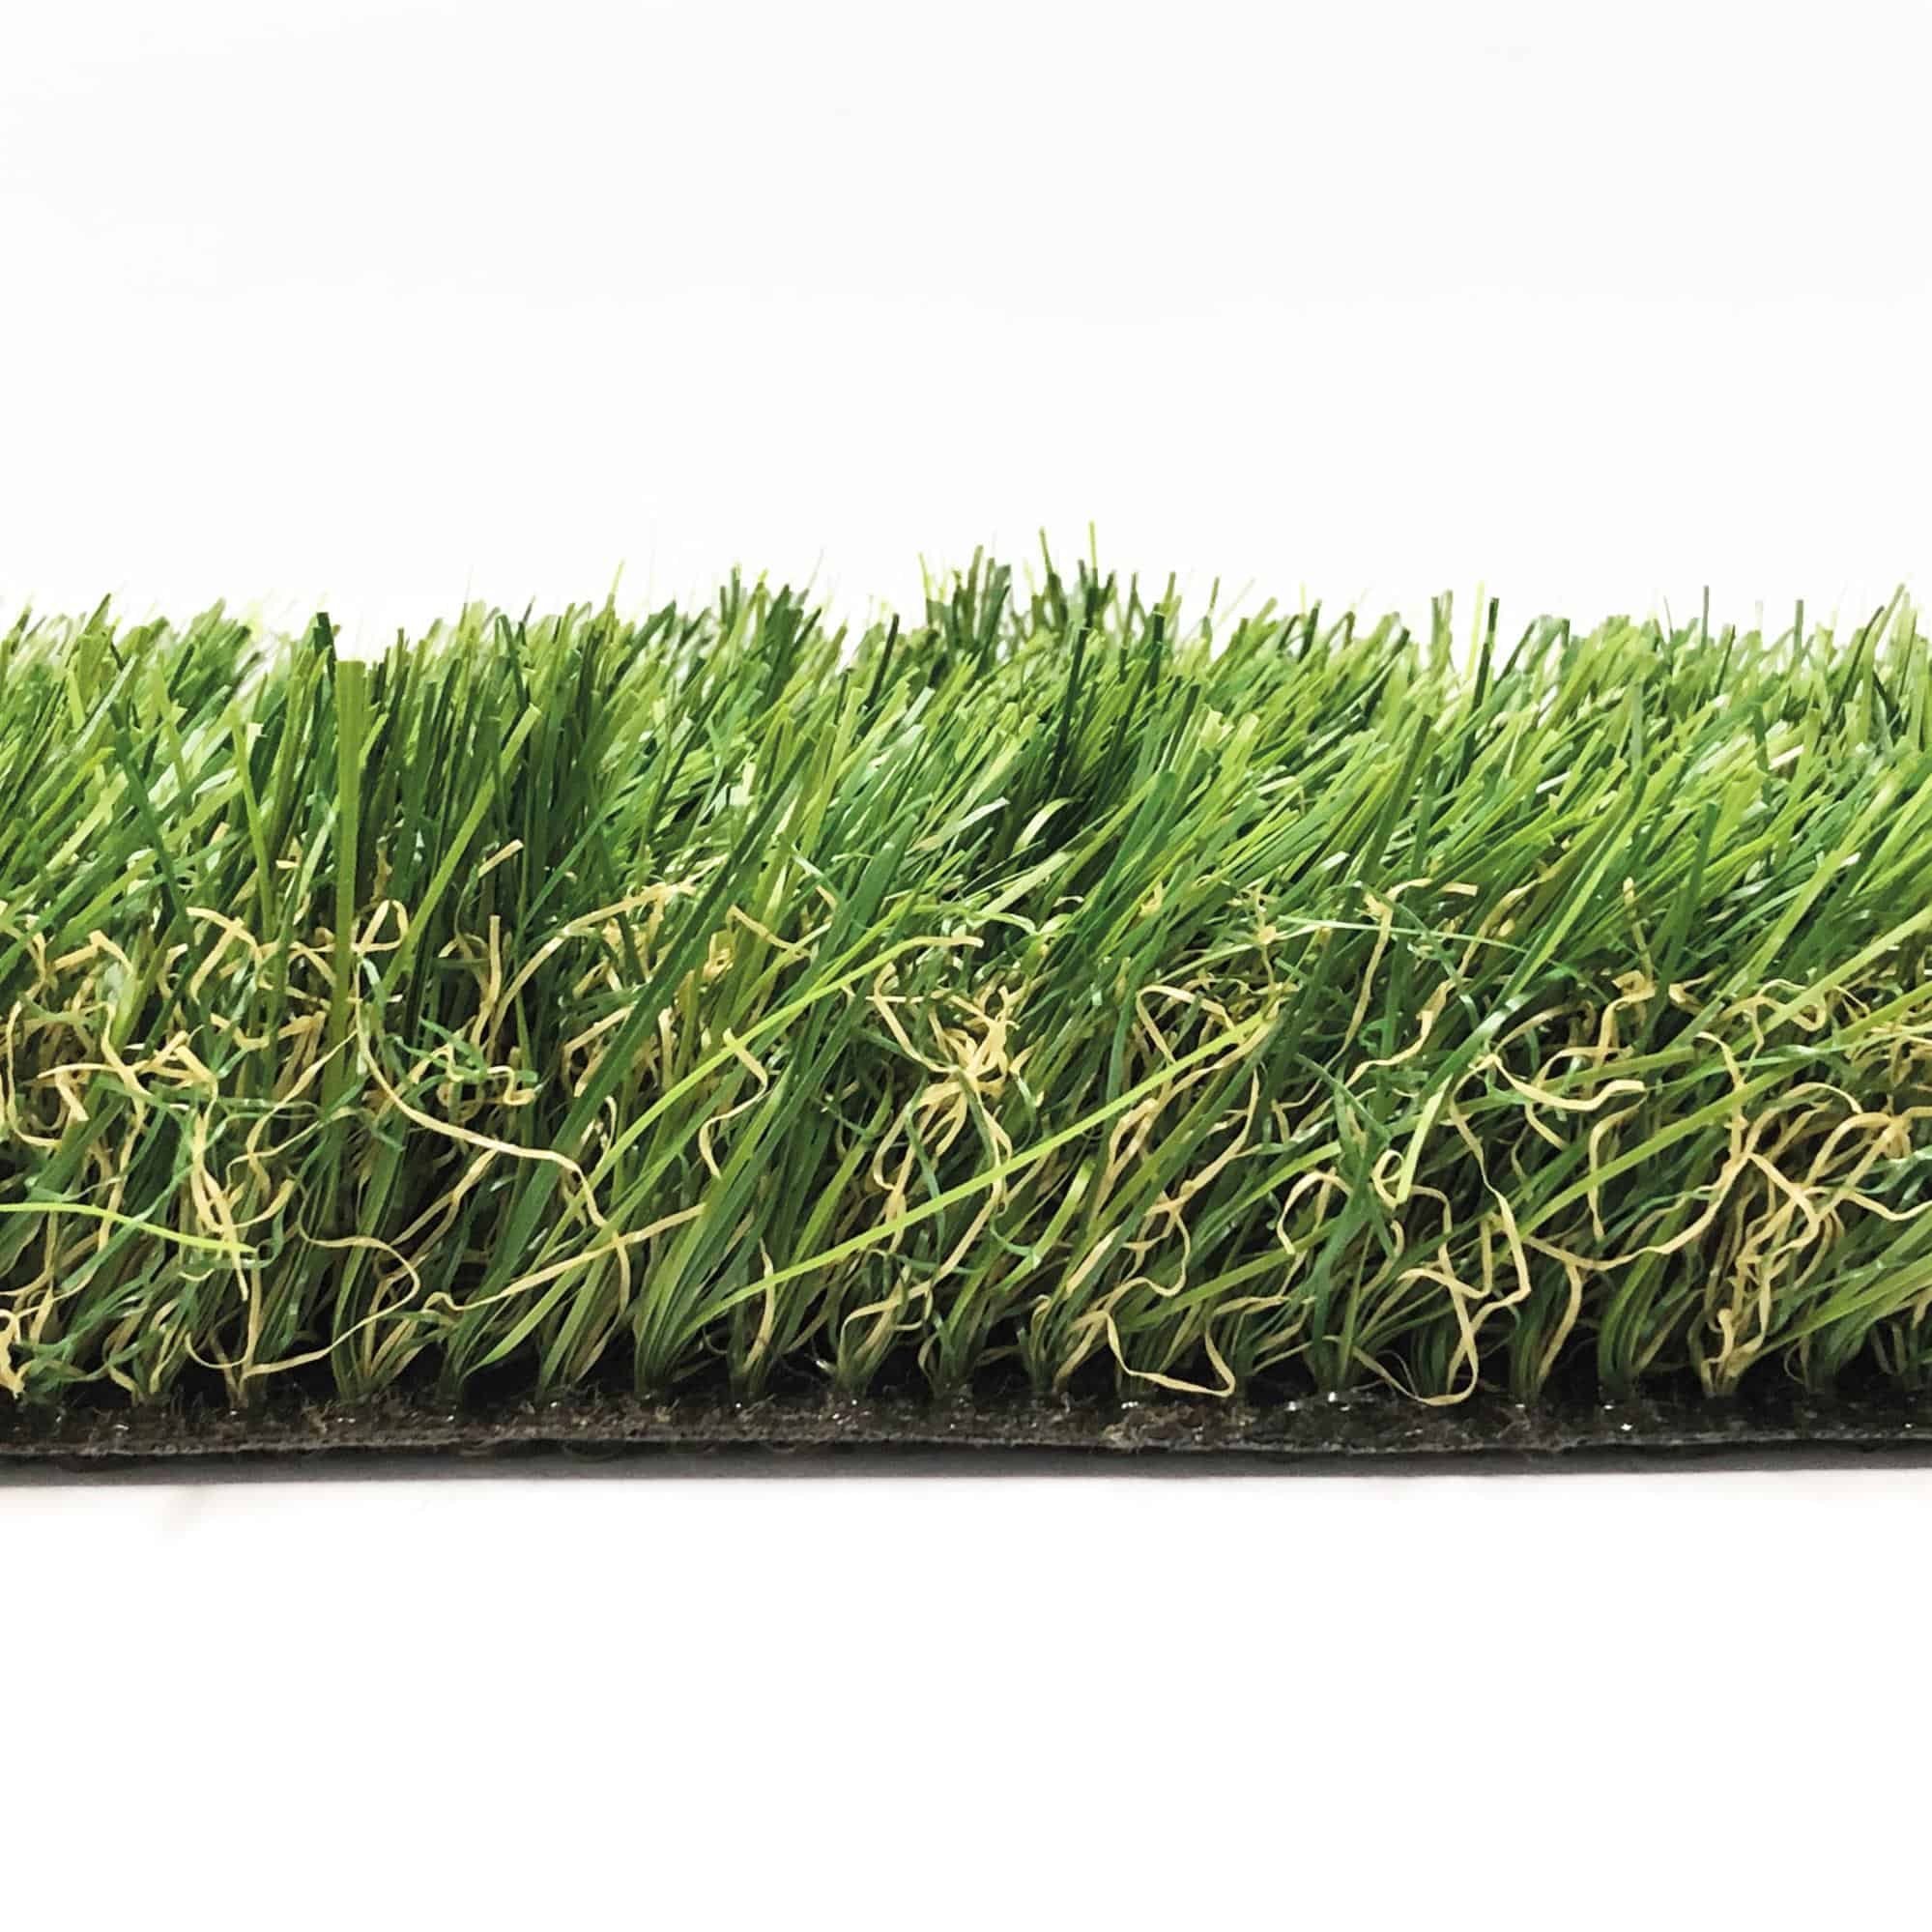 CORE Lawn Natural Artificial Grass 4m Wide Roll 18 m